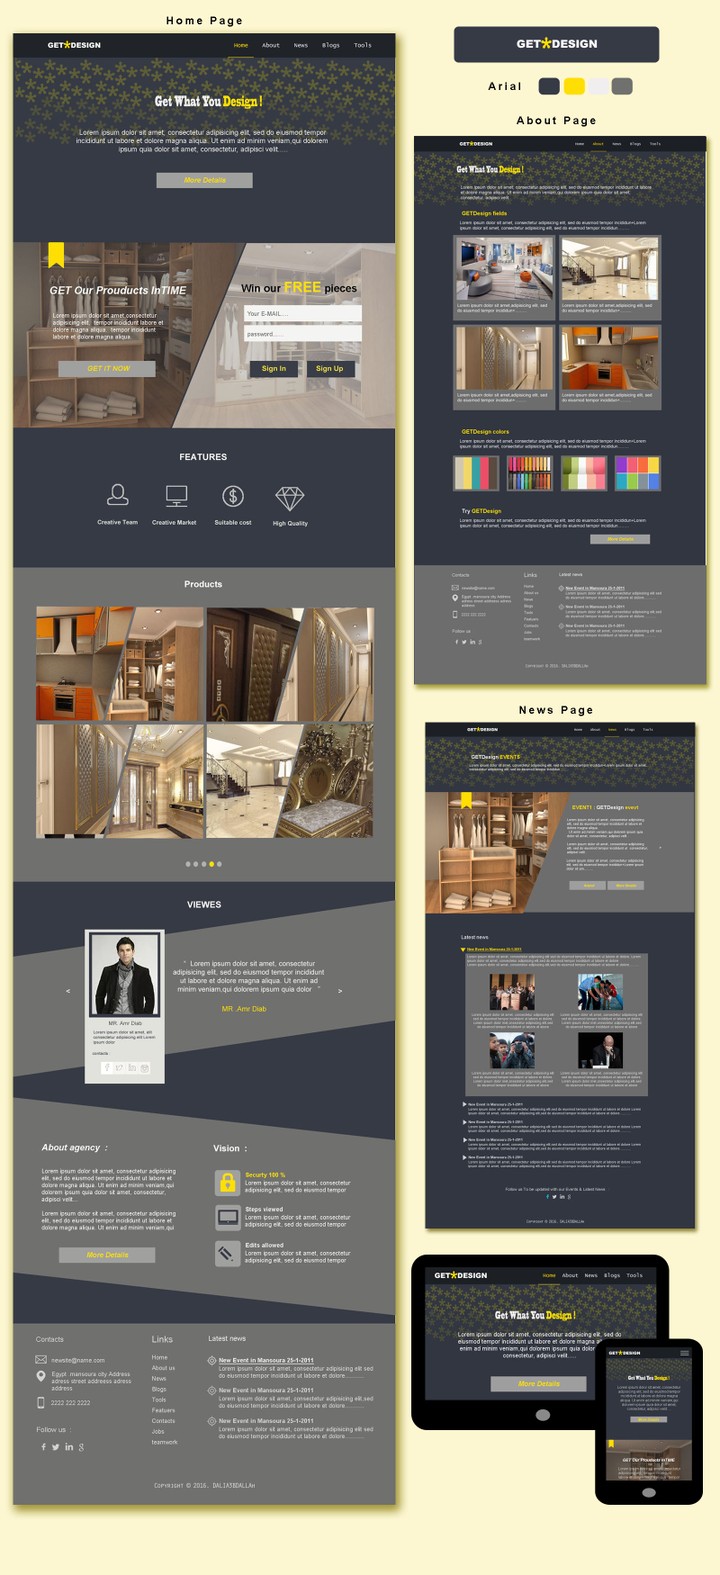 GetDesign website design